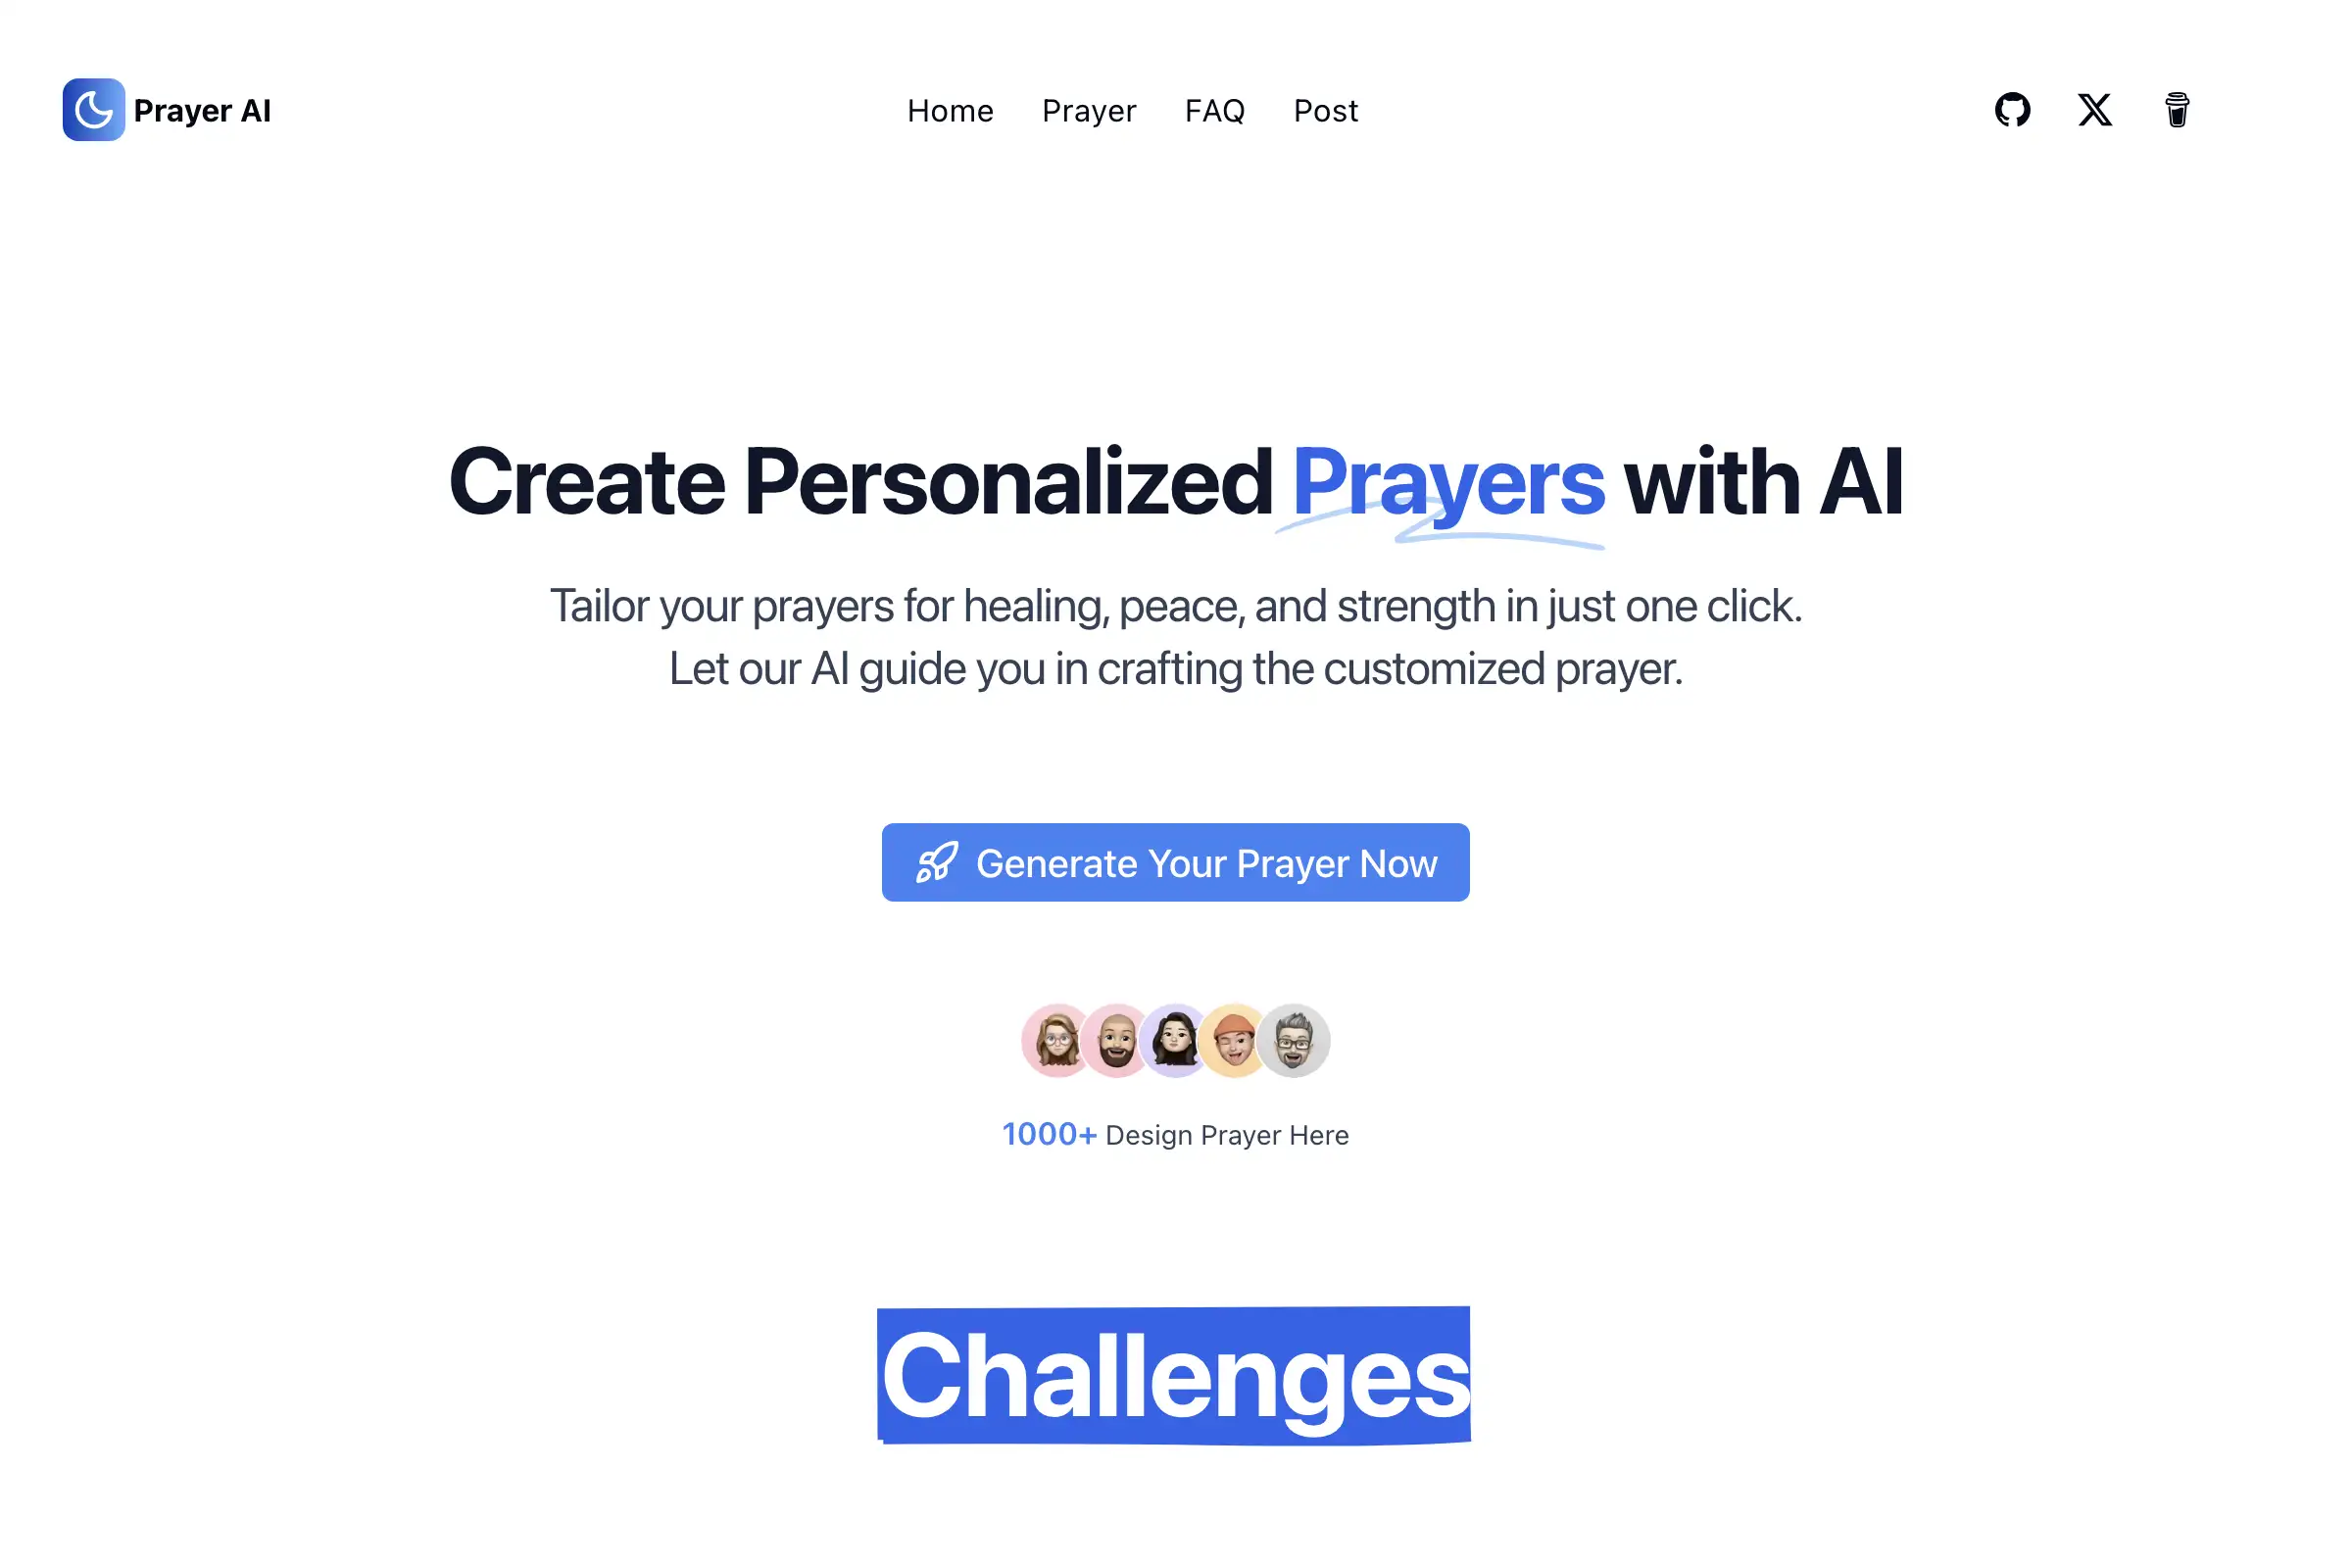 Prayer AI